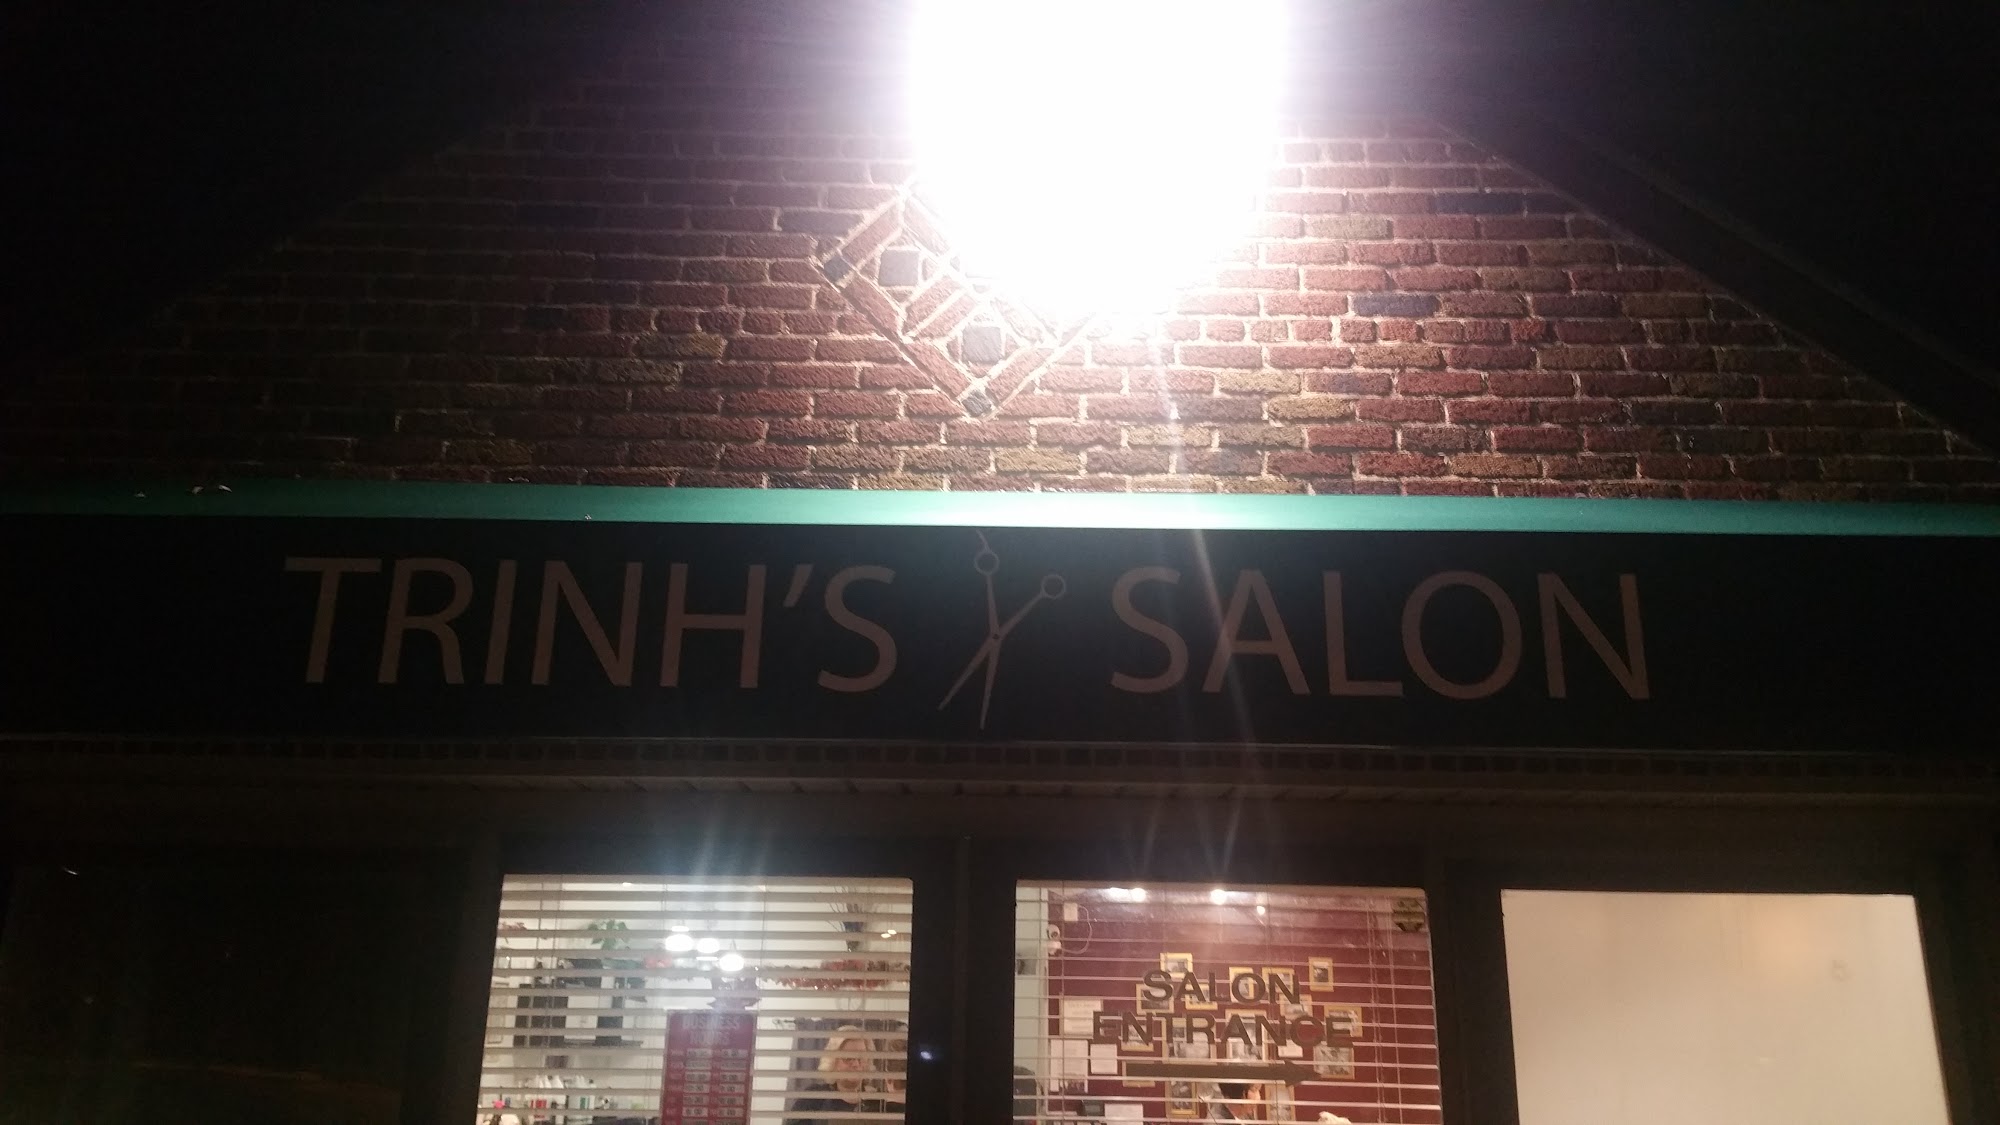 TRINH'S SALON LLC